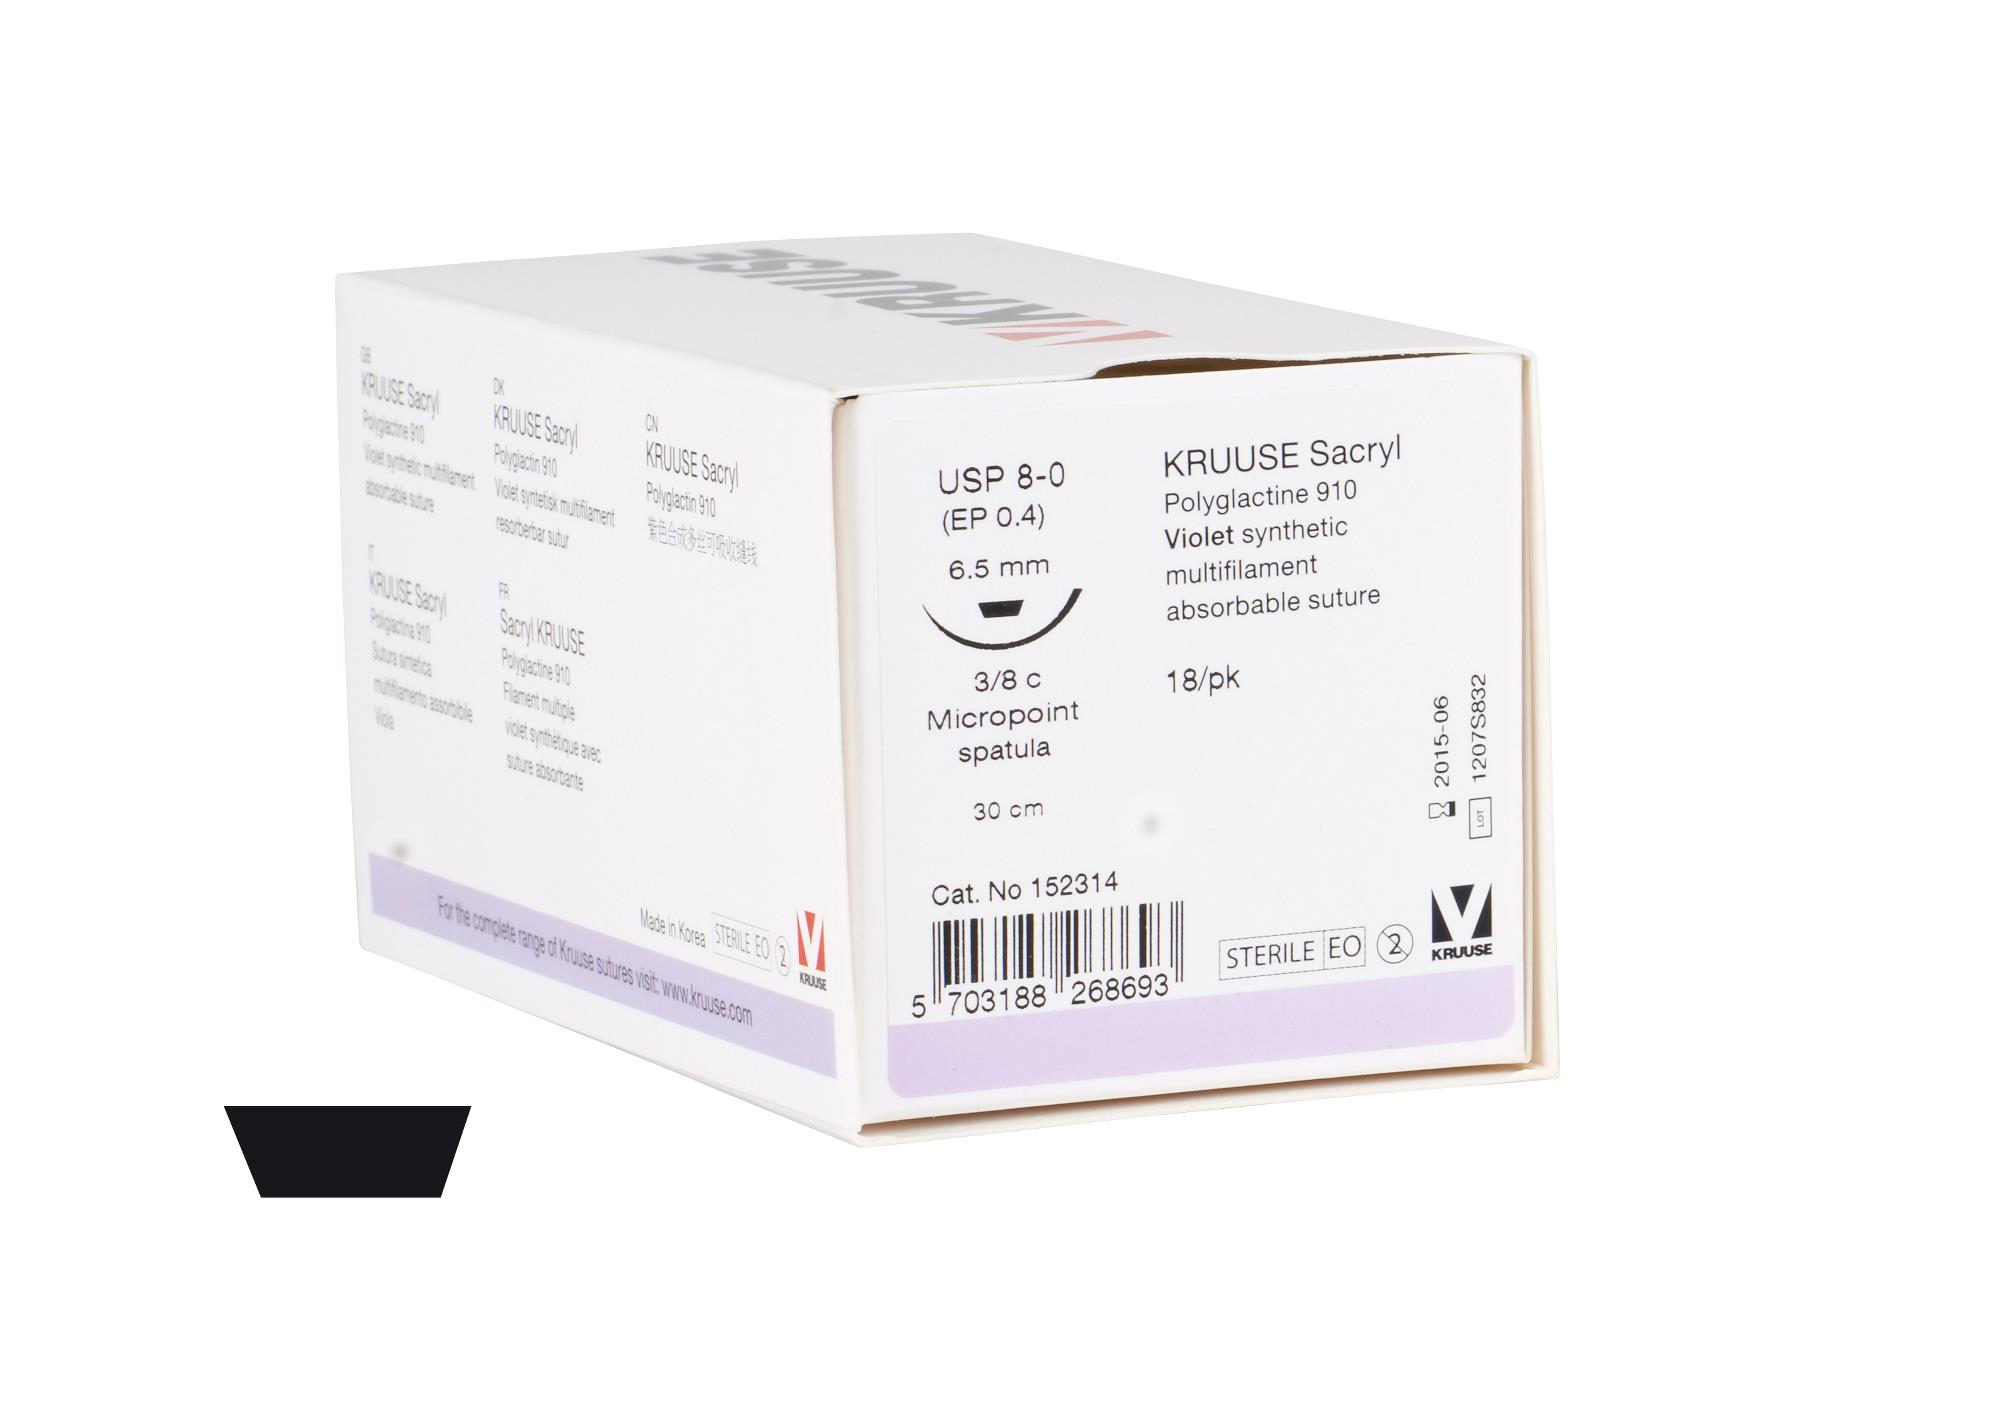 KRUUSE Sacryl suture, USP 8-0, 30 cm, needle: 6,5 mm, micropoint spatula, 3/8 circle. 18/pk